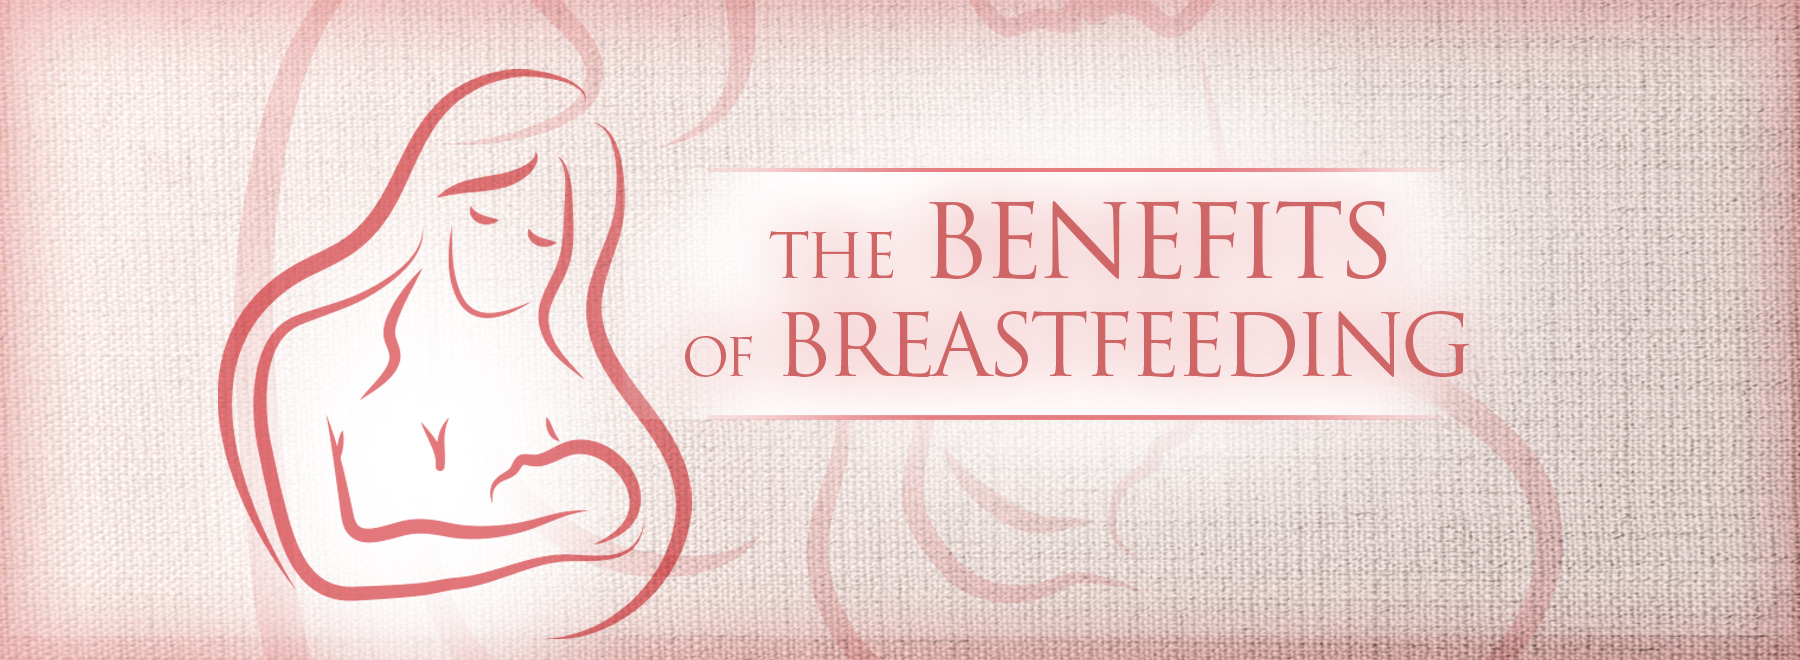 Benefits of Breastfeeding logo